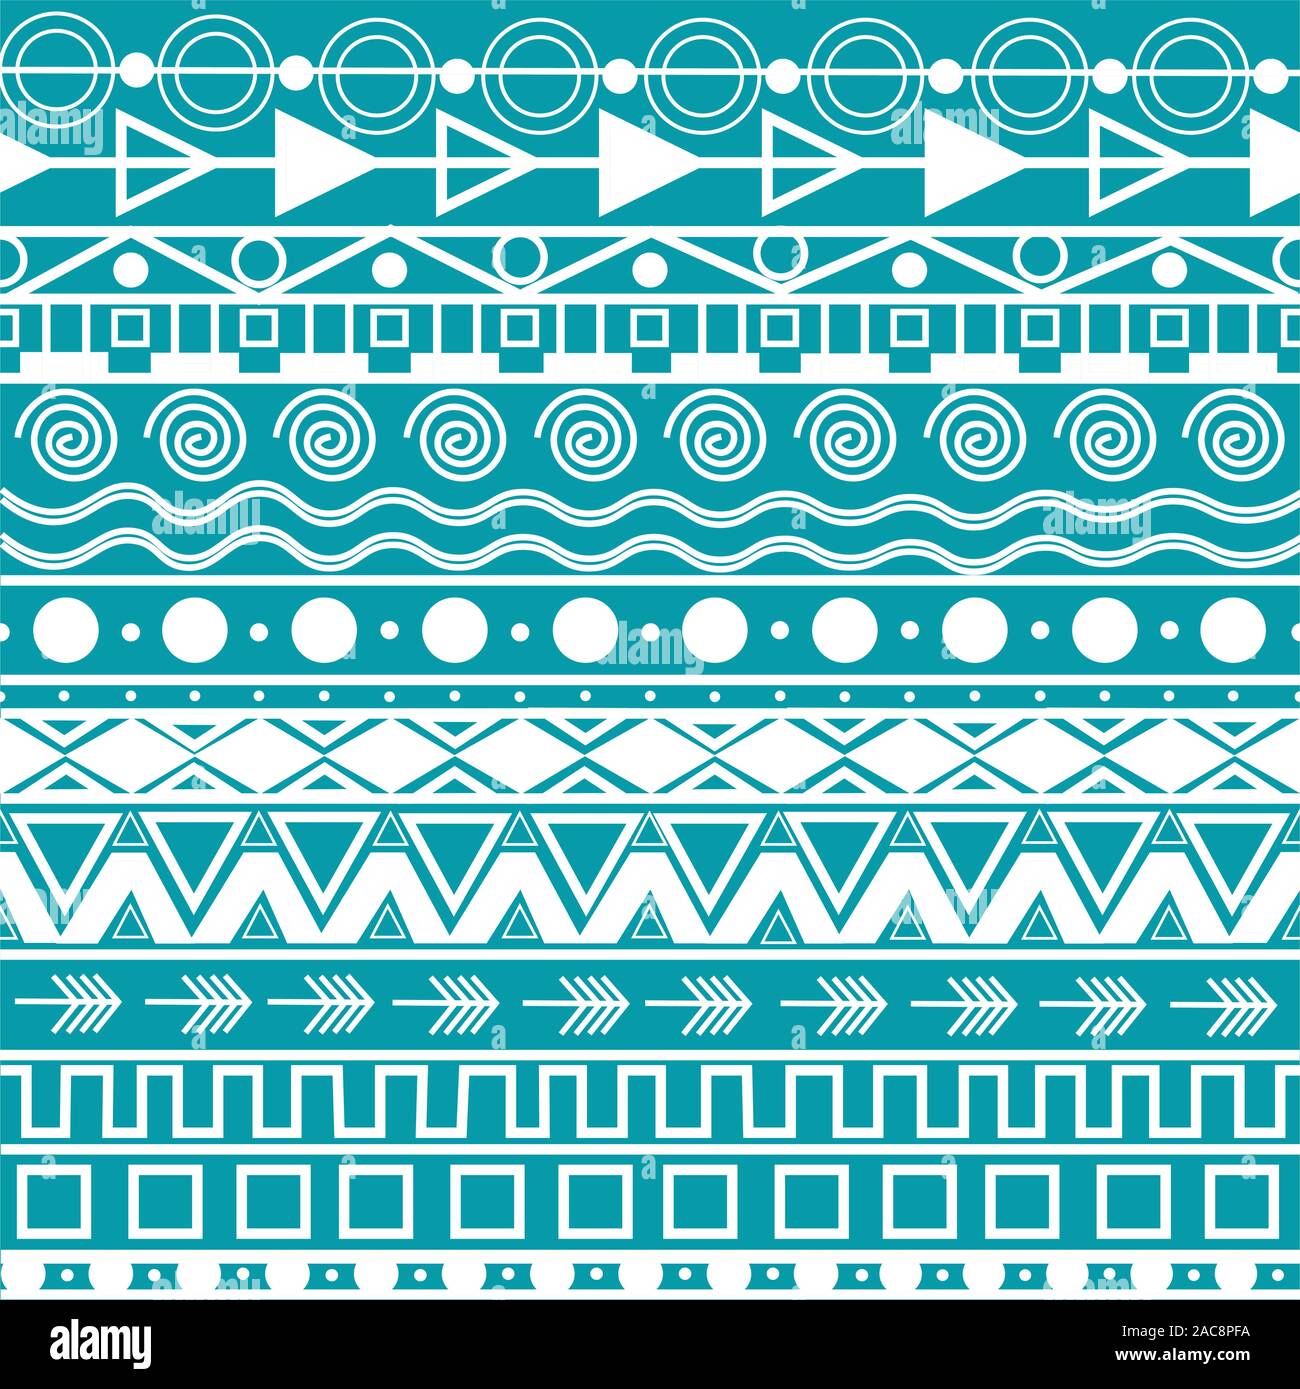 ancient aztec clothing patterns